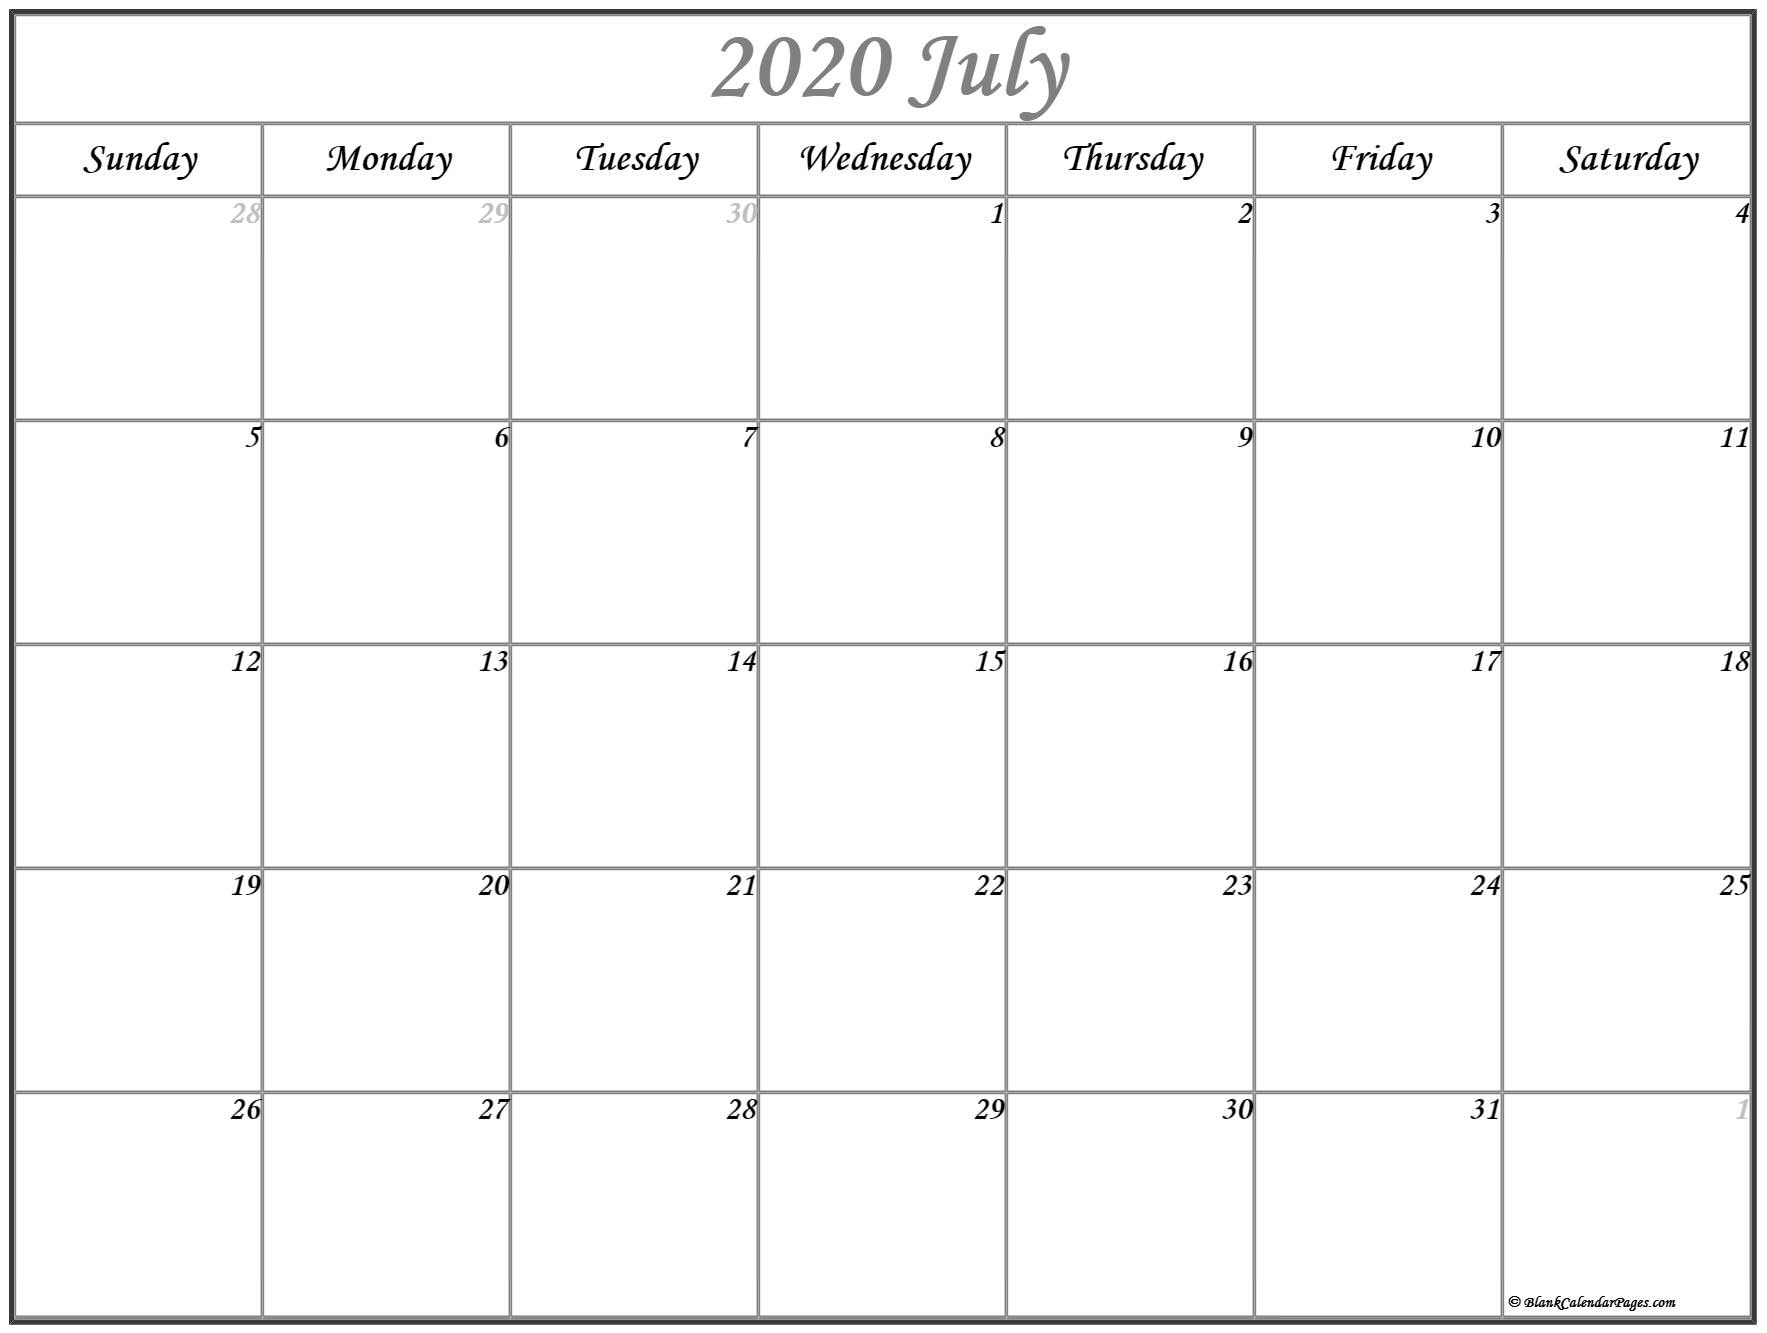 July 2020 Calendar | Free Printable Monthly Calendars